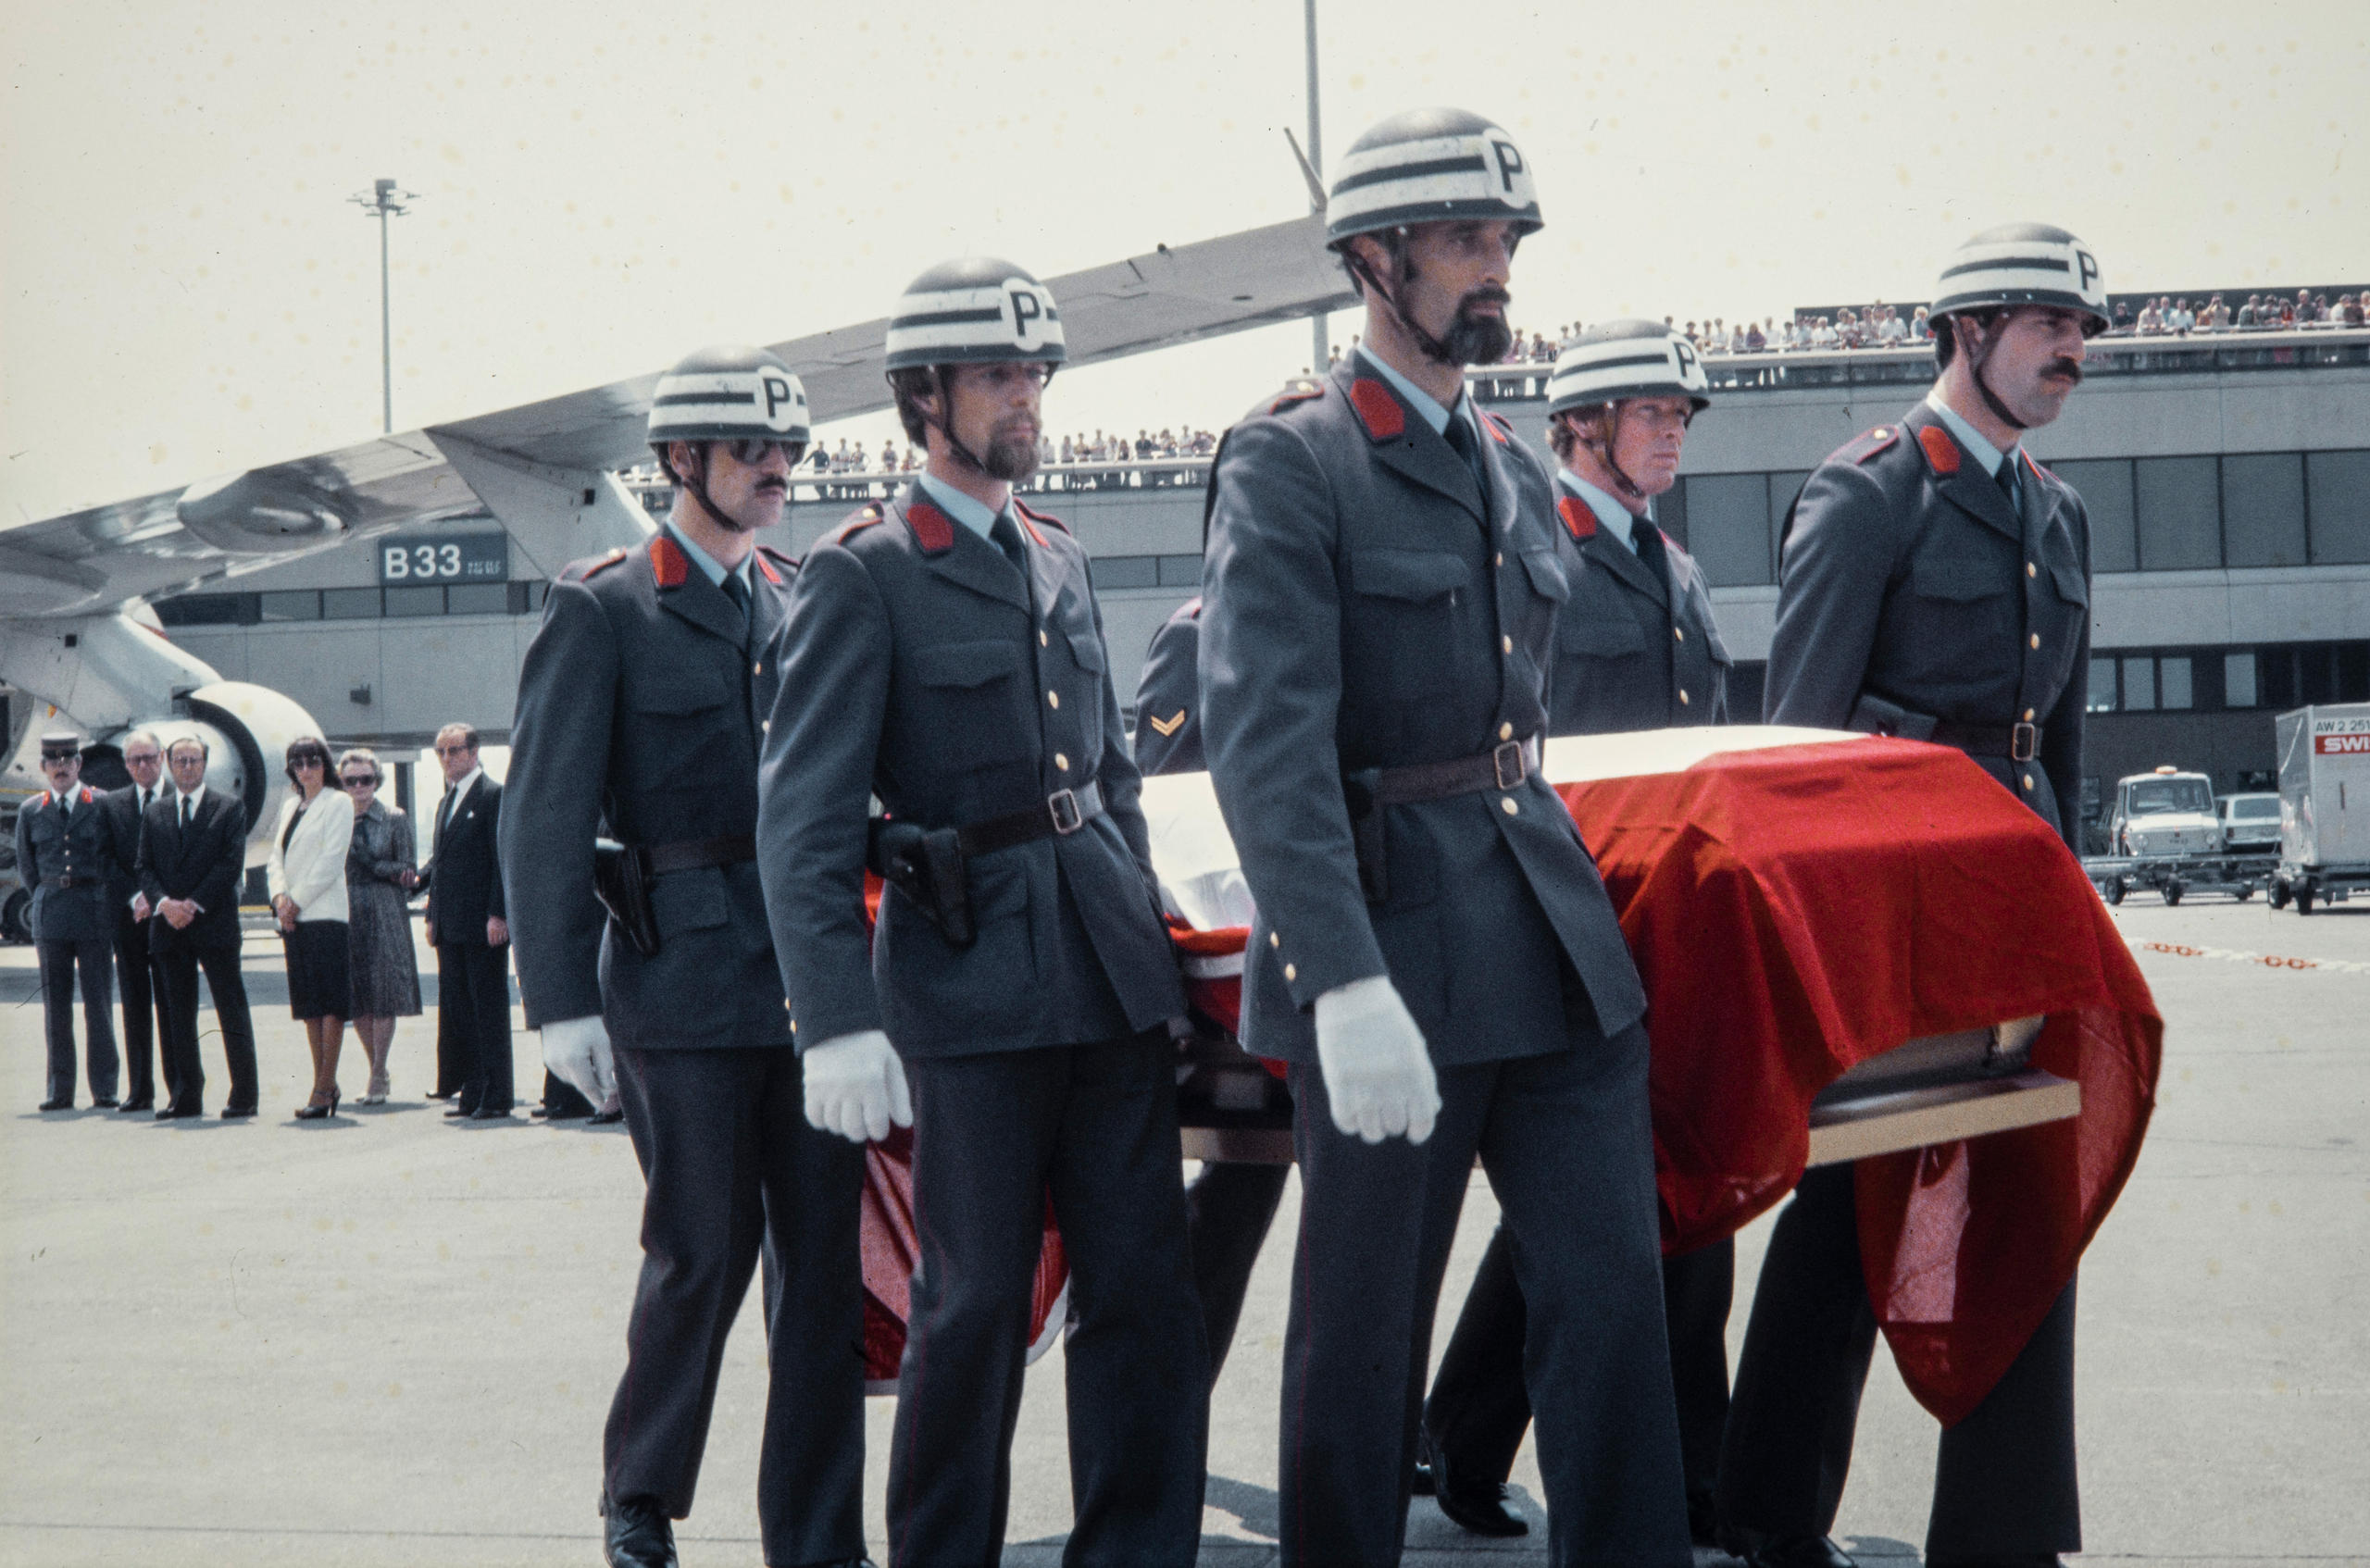 Transport d un cercueil par six policiers casqués.